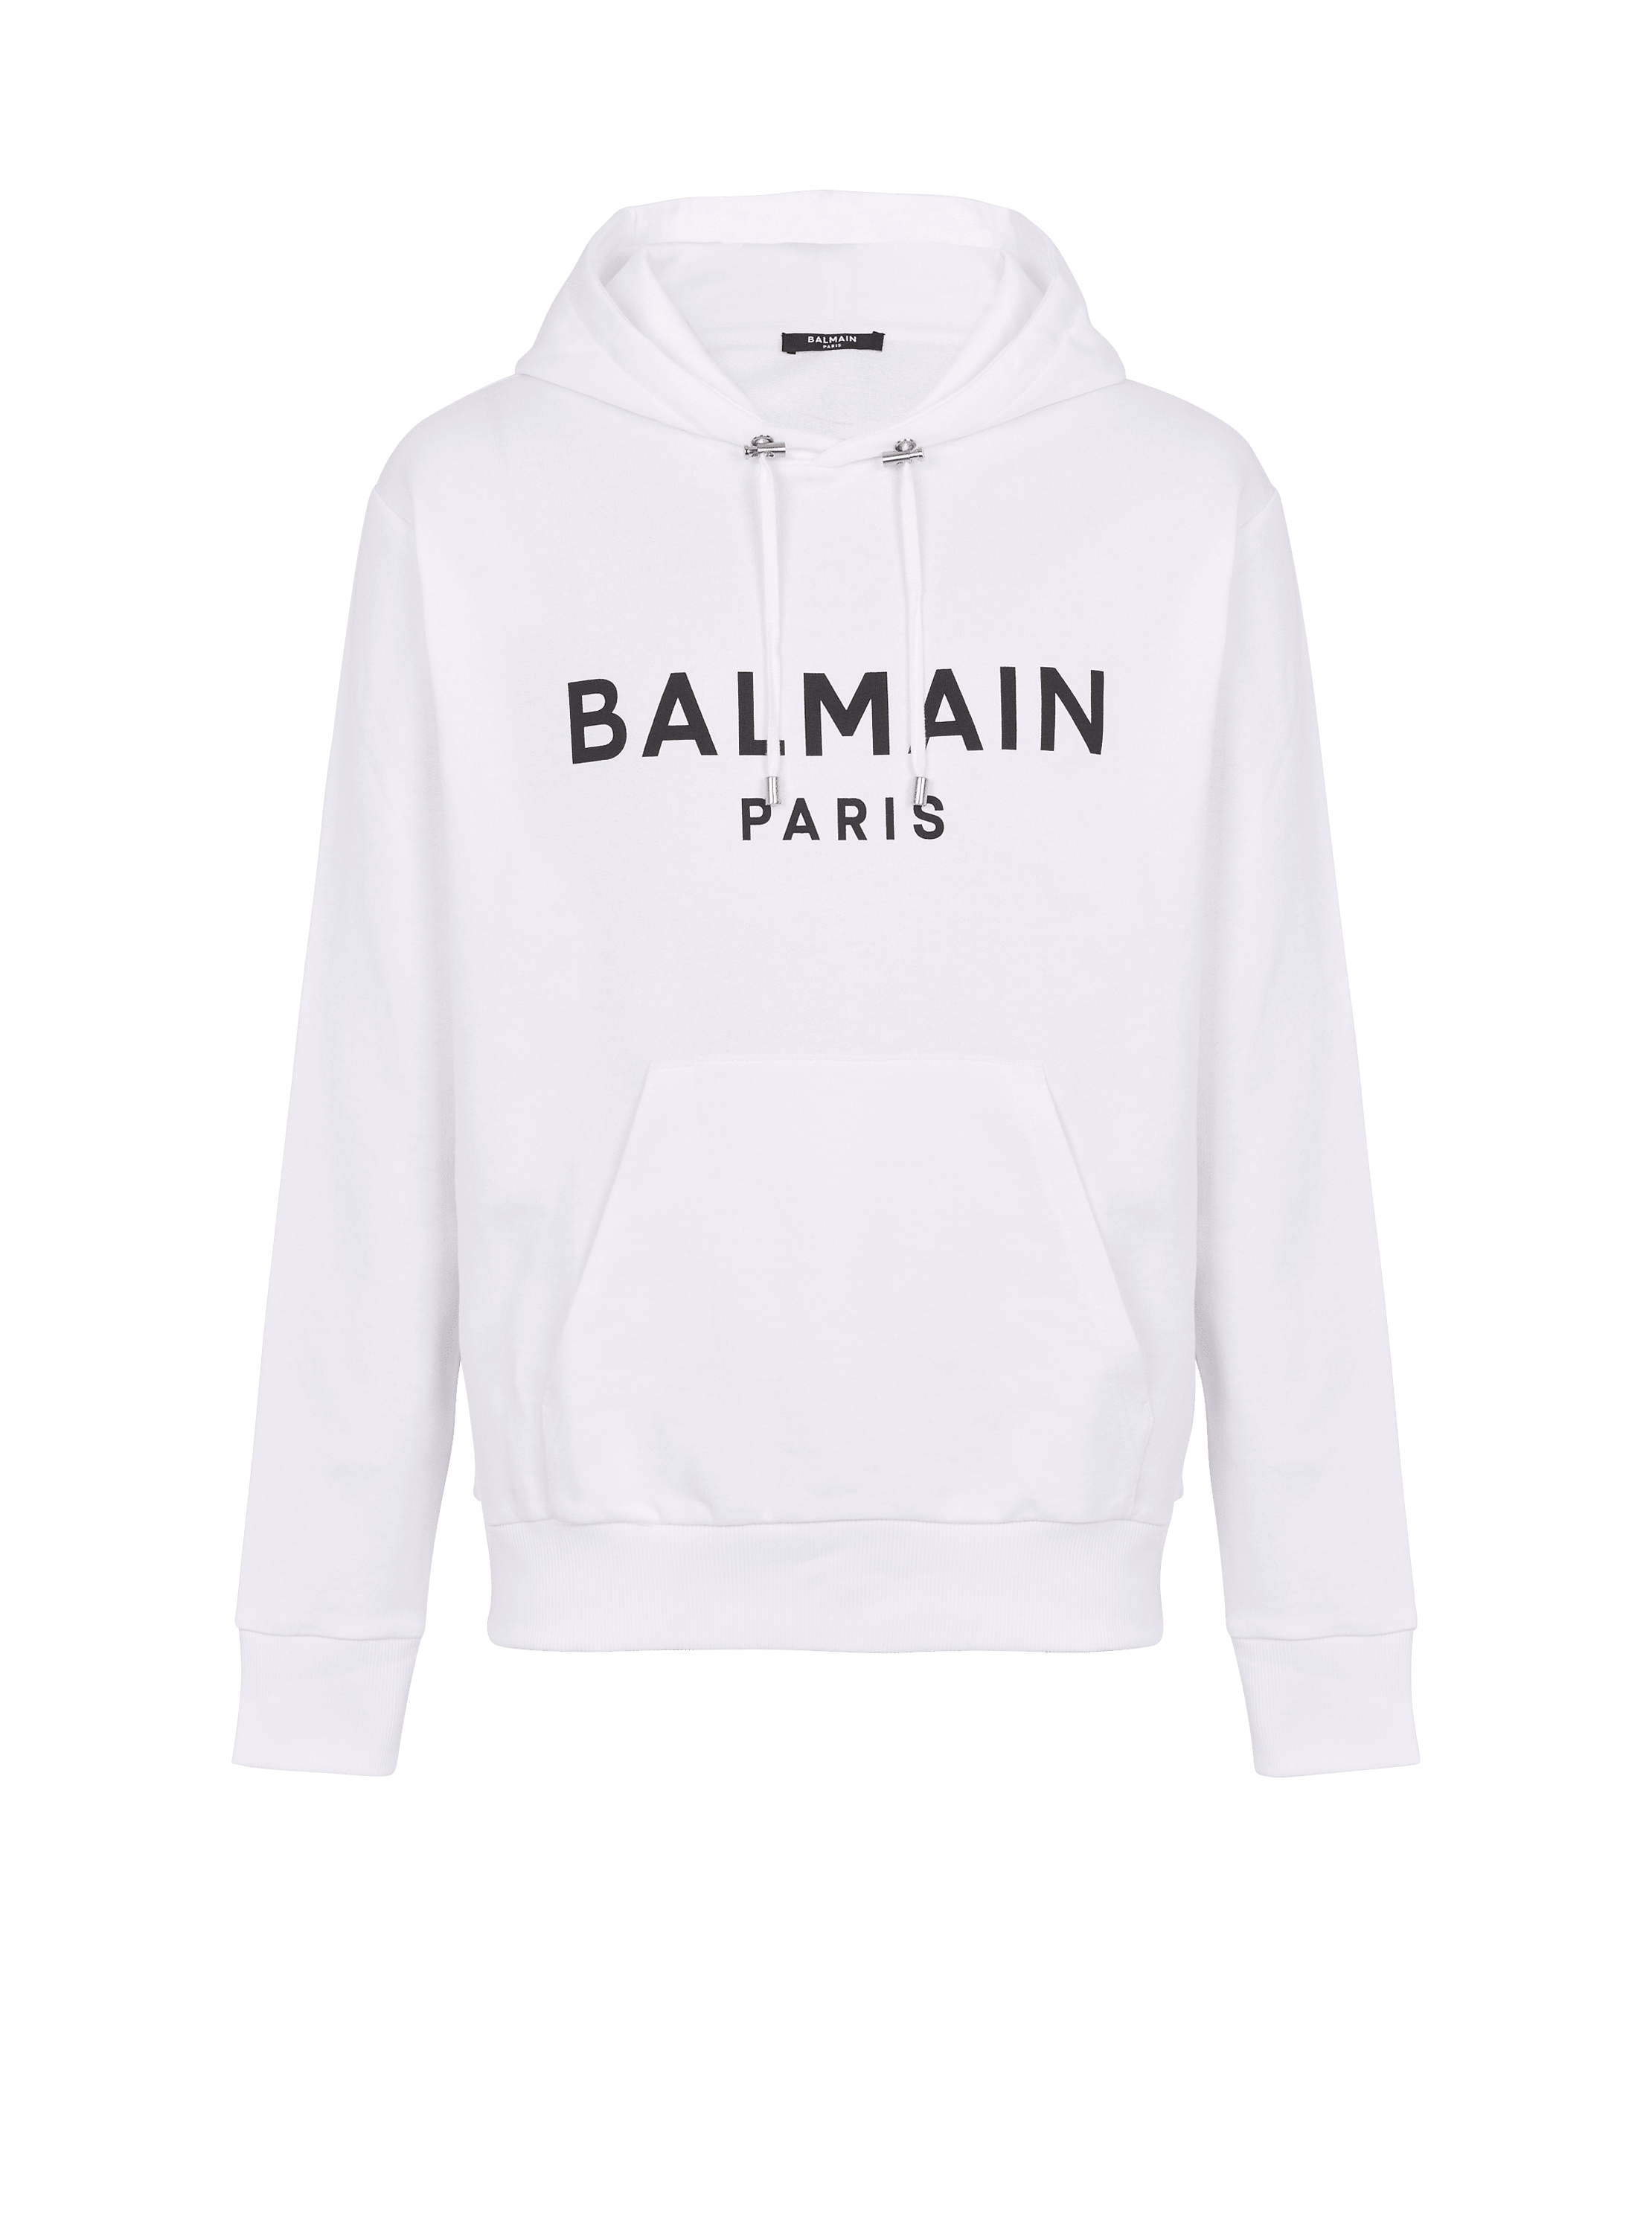 Balmain Paris フーディー